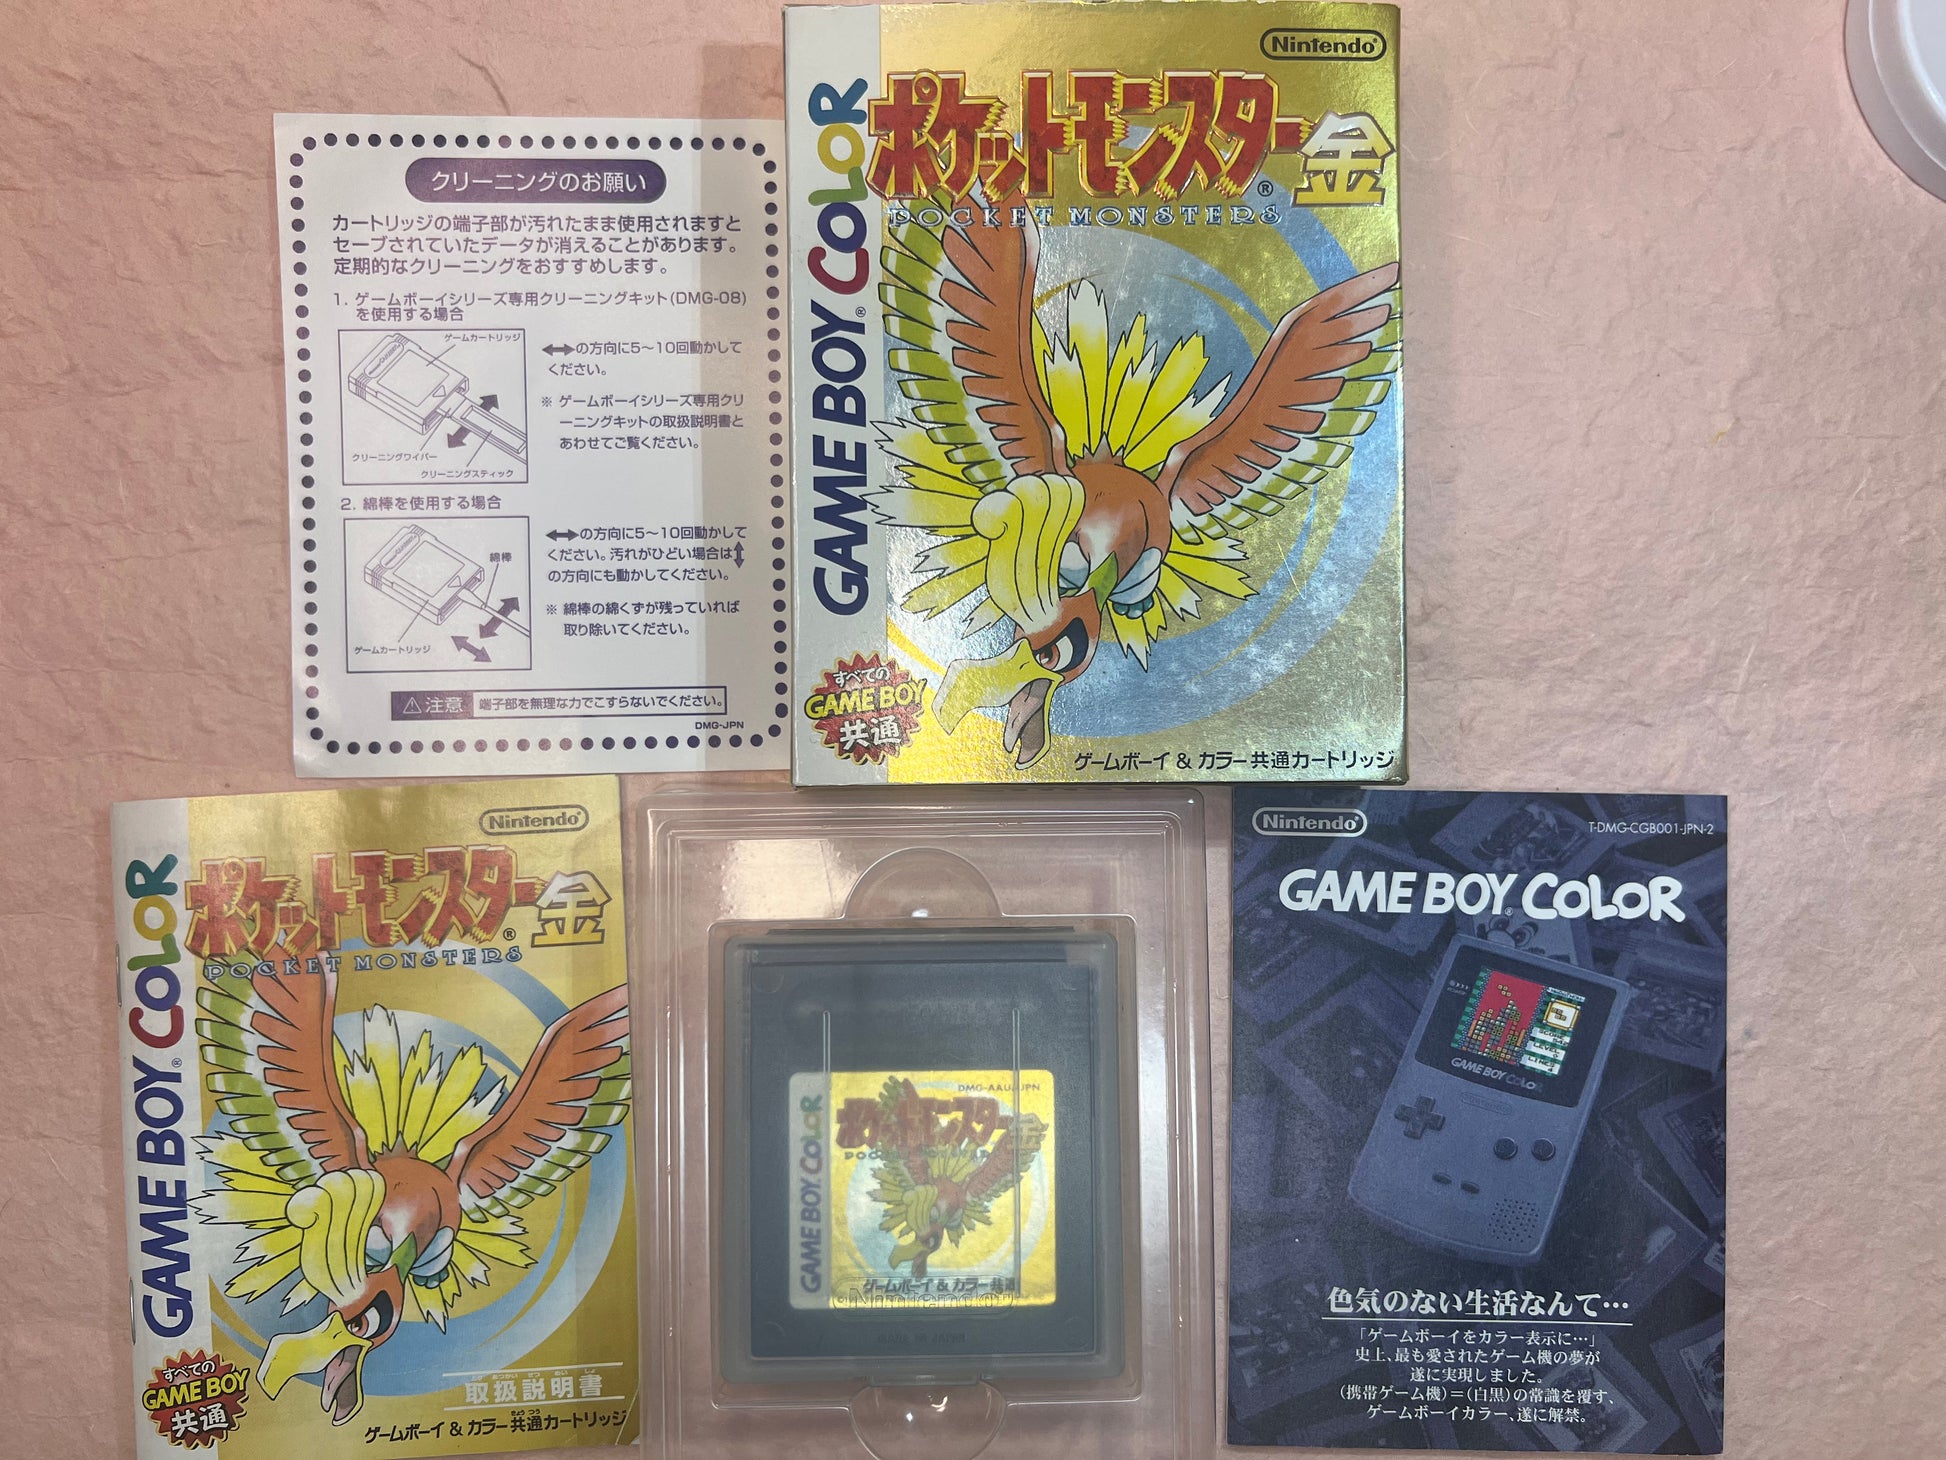 Pokemon Gold - Nintendo Gameboy GBC (Used) 